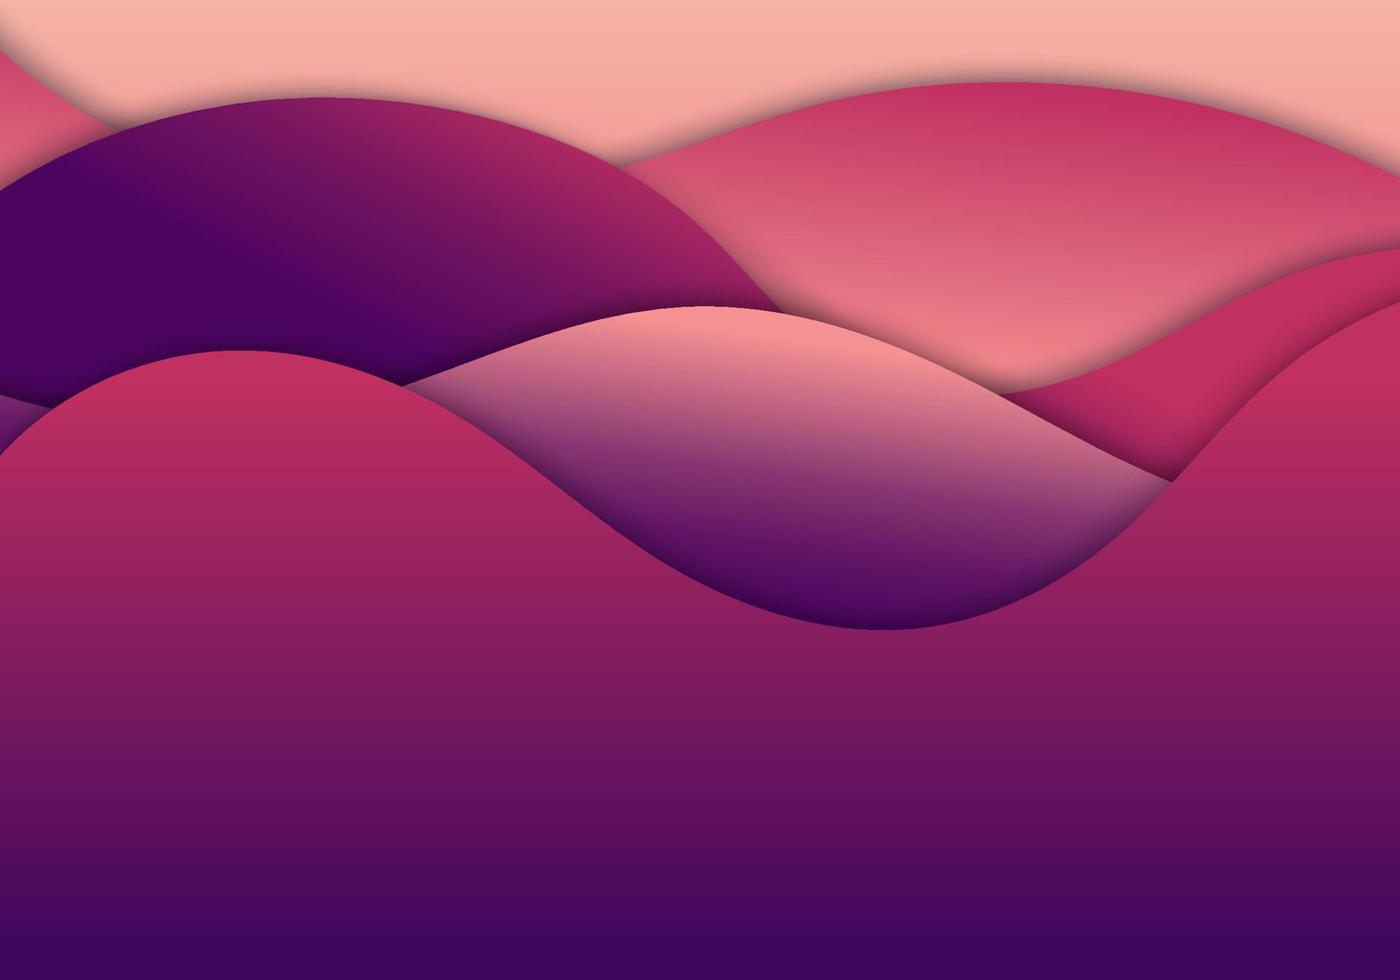 abstracte moderne roze en paarse gradiëntkleur golfvorm papier knippen stijl achtergrond en textuur vector